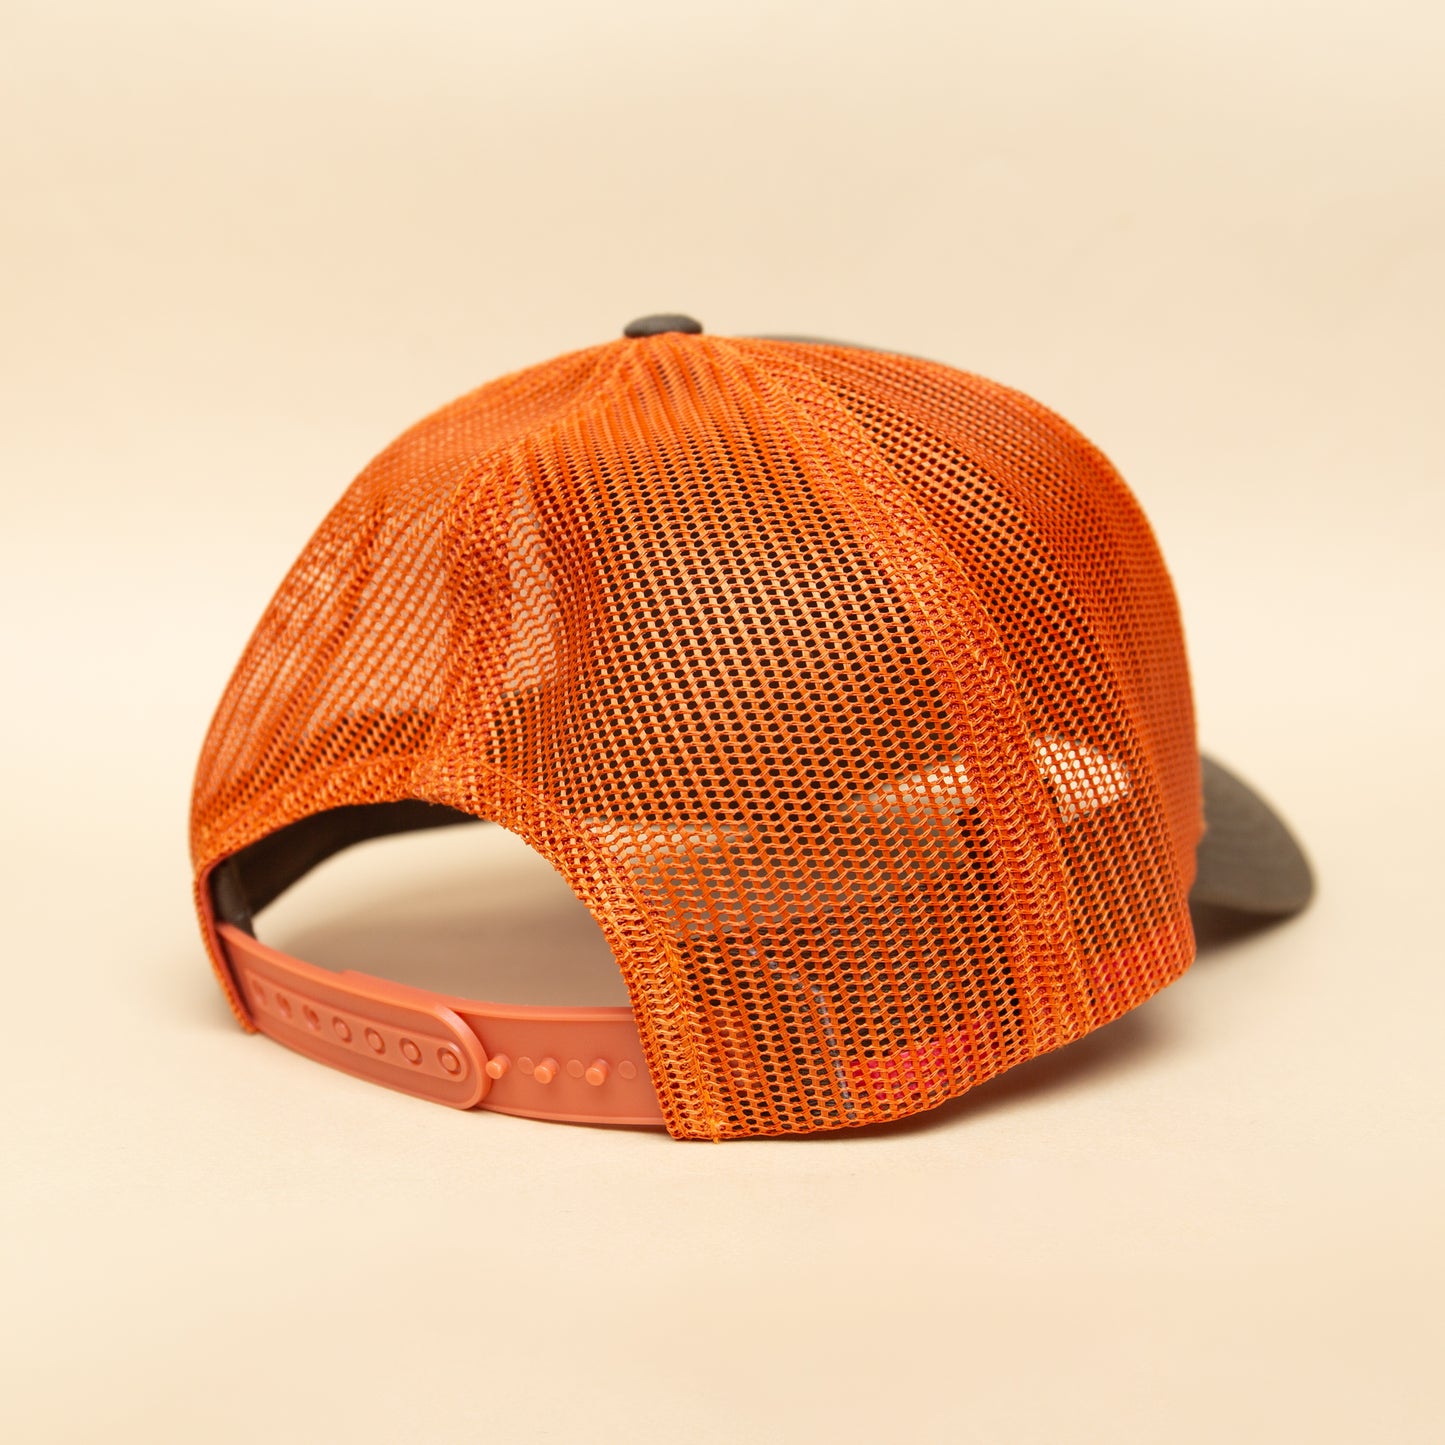 OR Adventures Hat (Green/Orange)